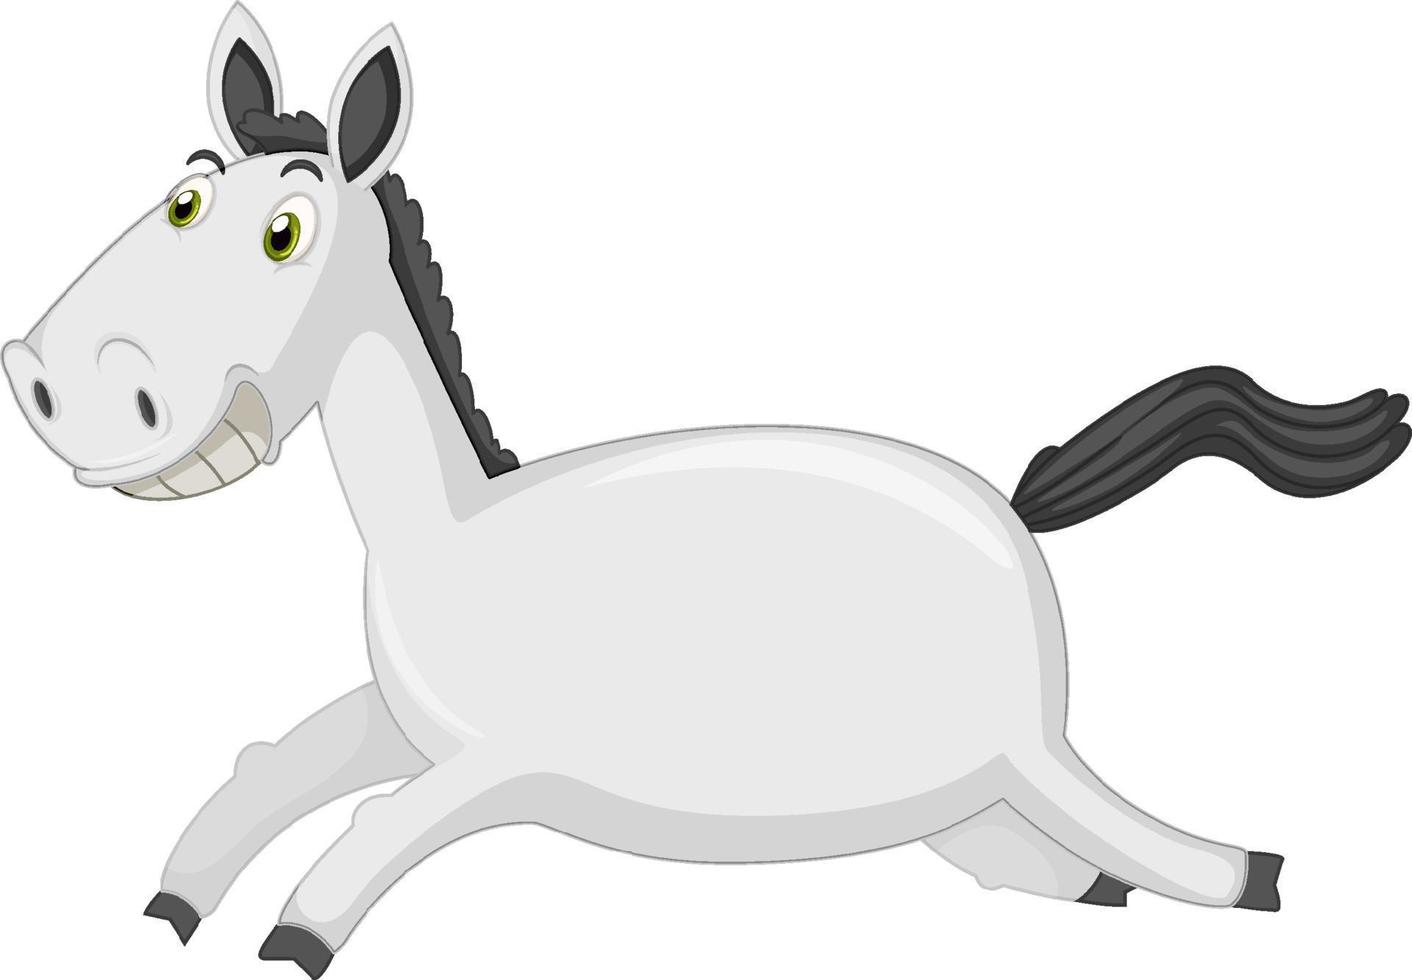 Running horse cartoon on white background vector